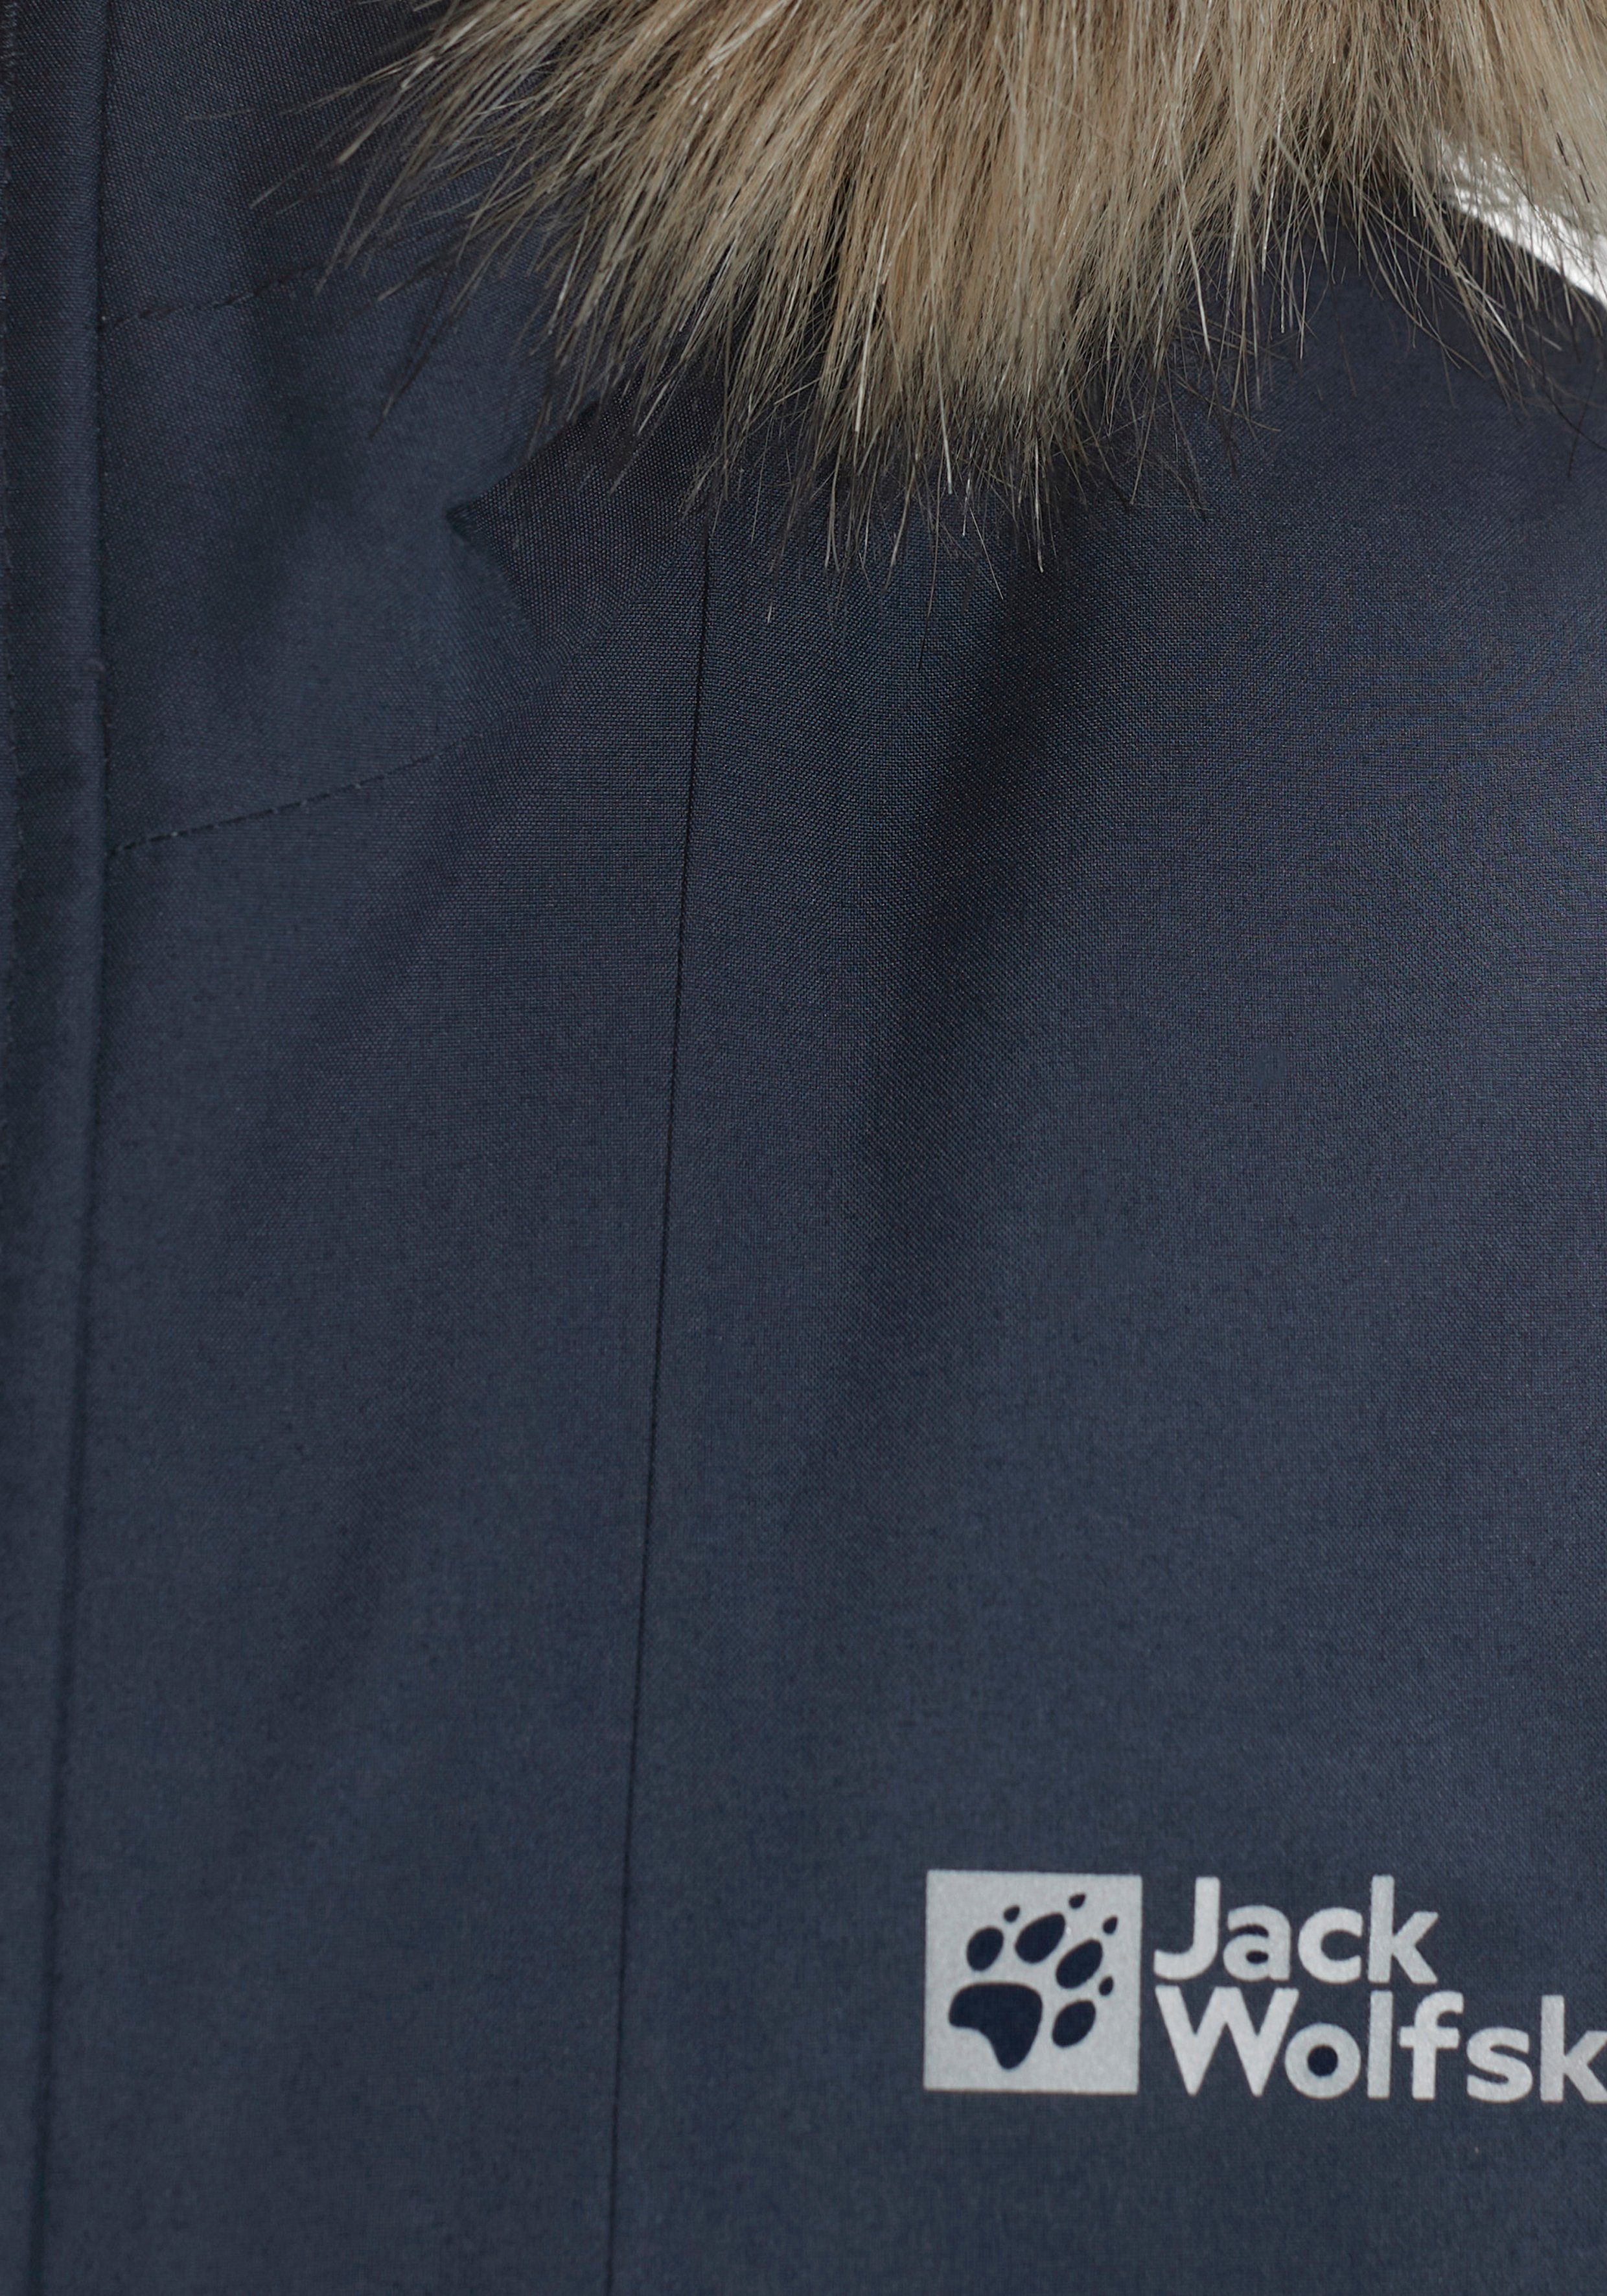 Jack Wolfskin Outdoorjacke JACKET BEAR langer, night Kinderparka isolierender blue K COSY klassischen Design im